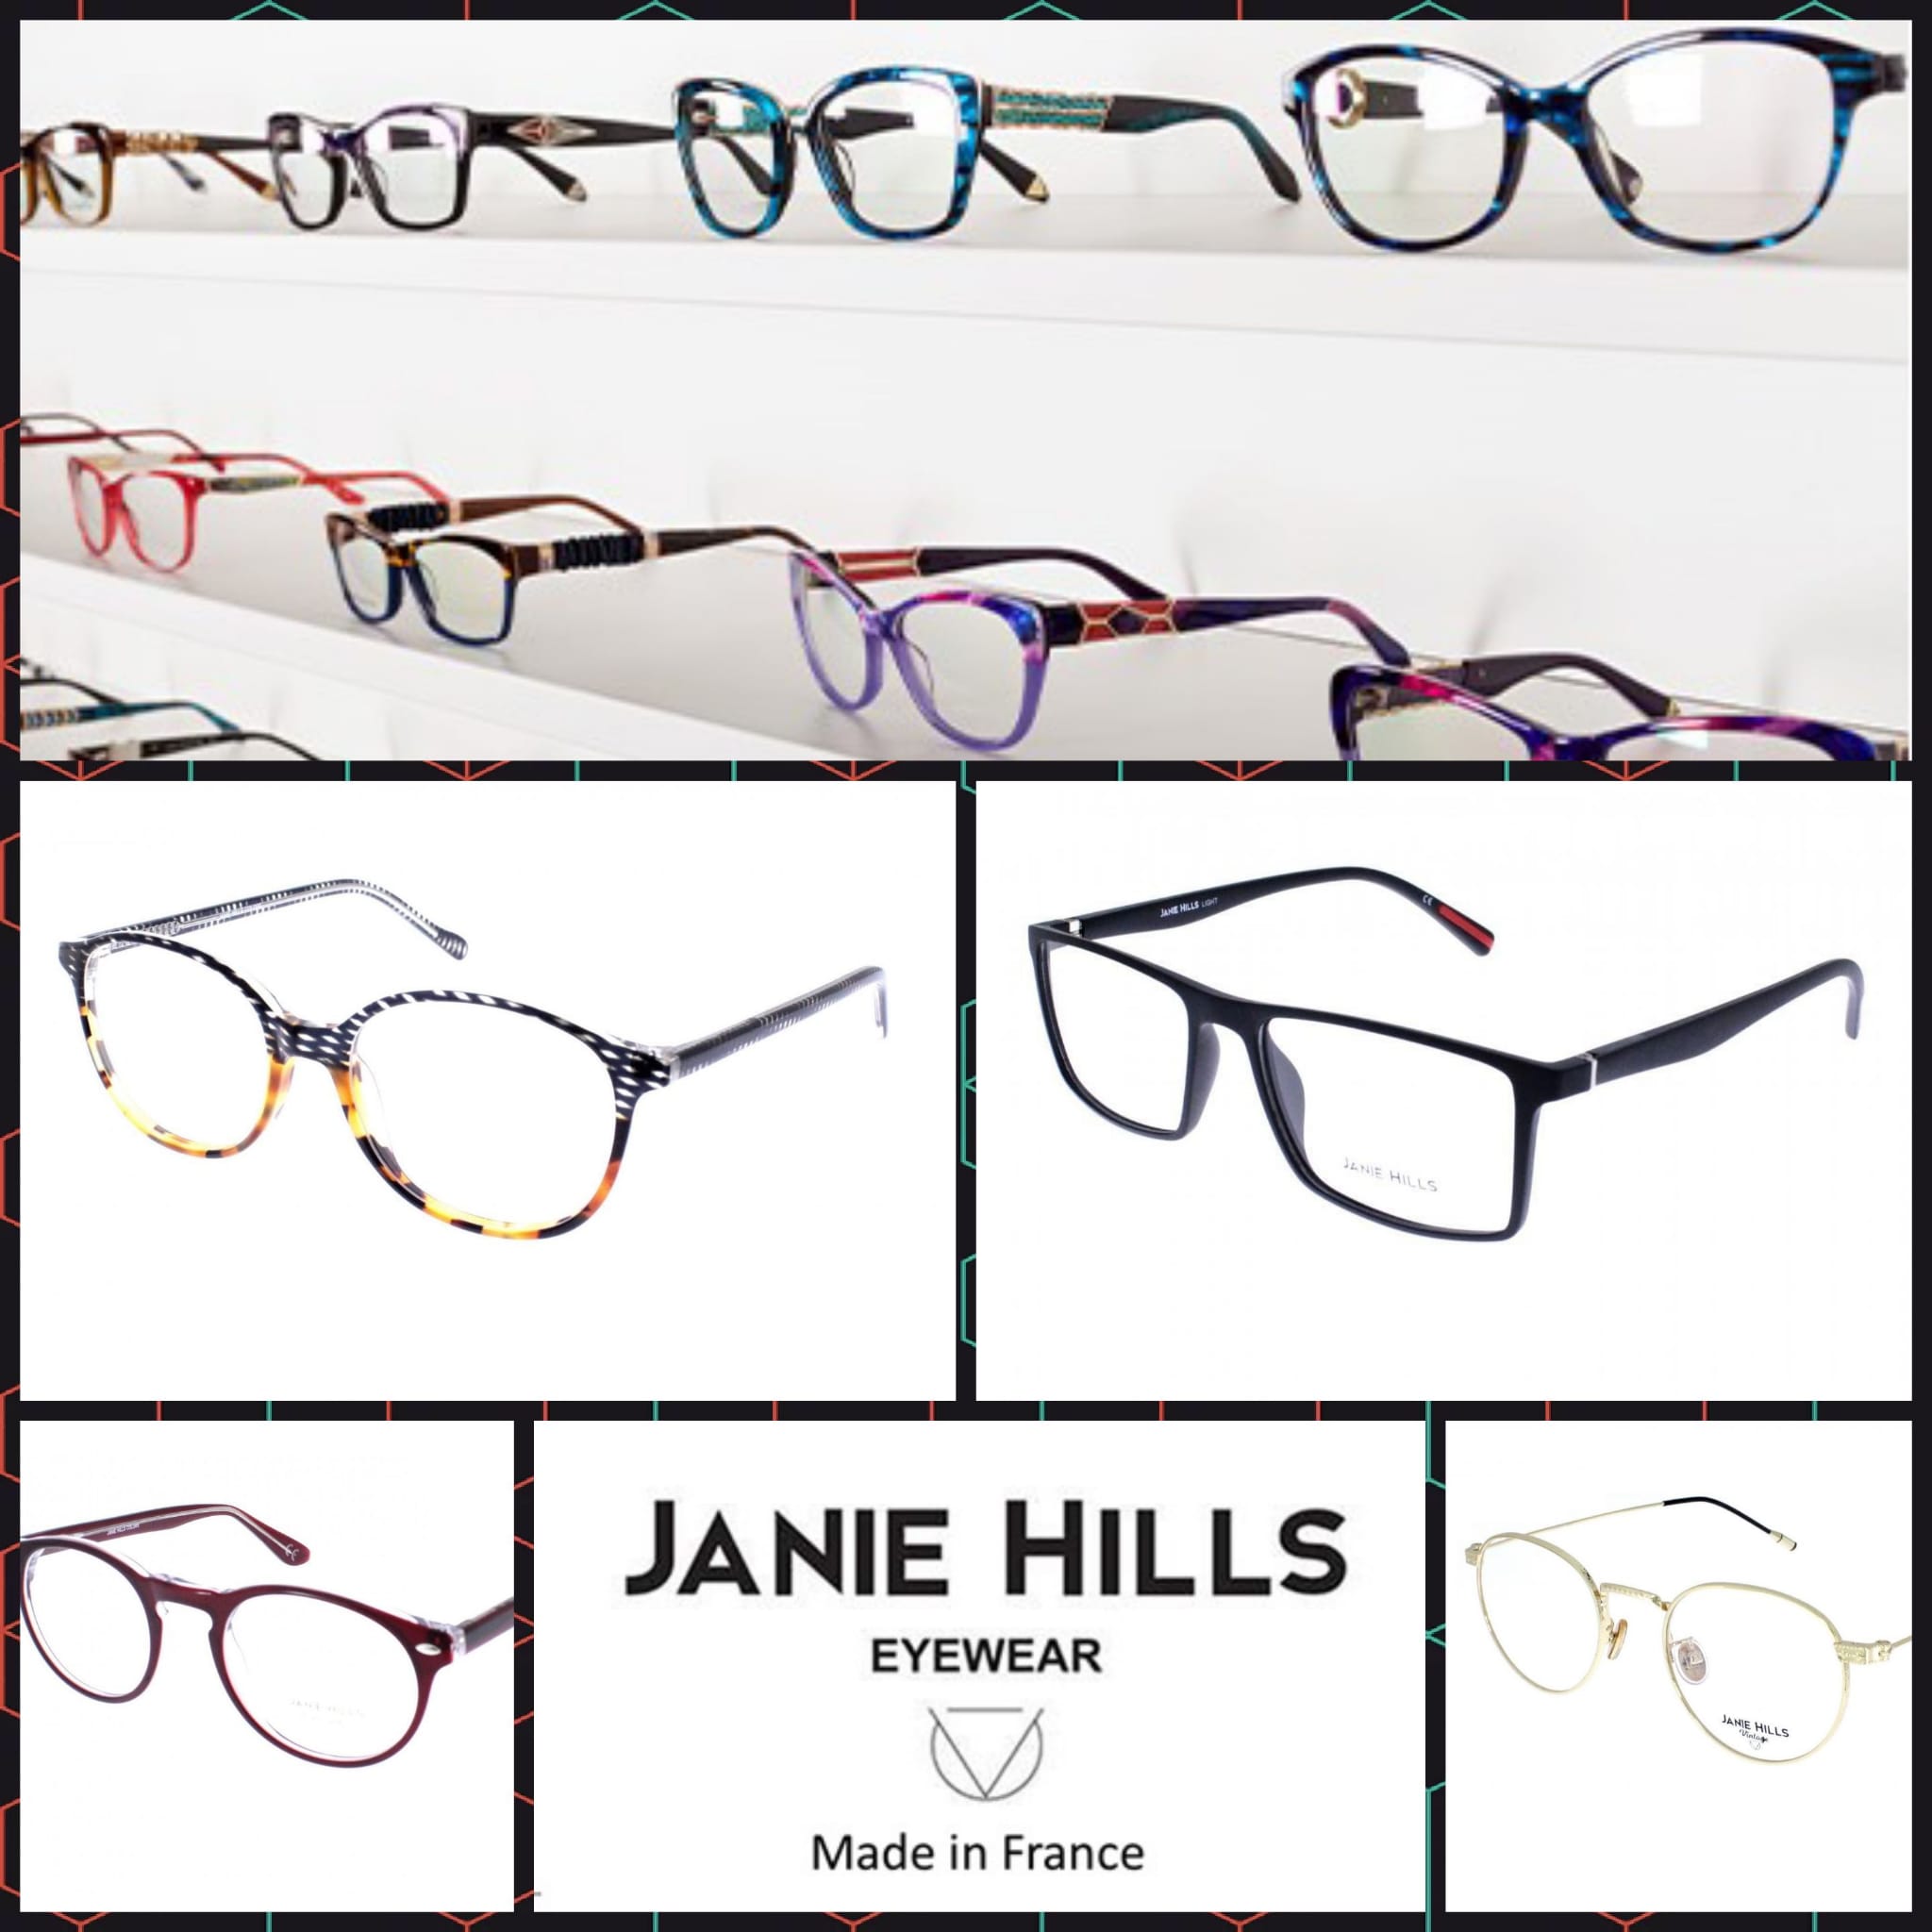 Janie Hills eyeglass frames